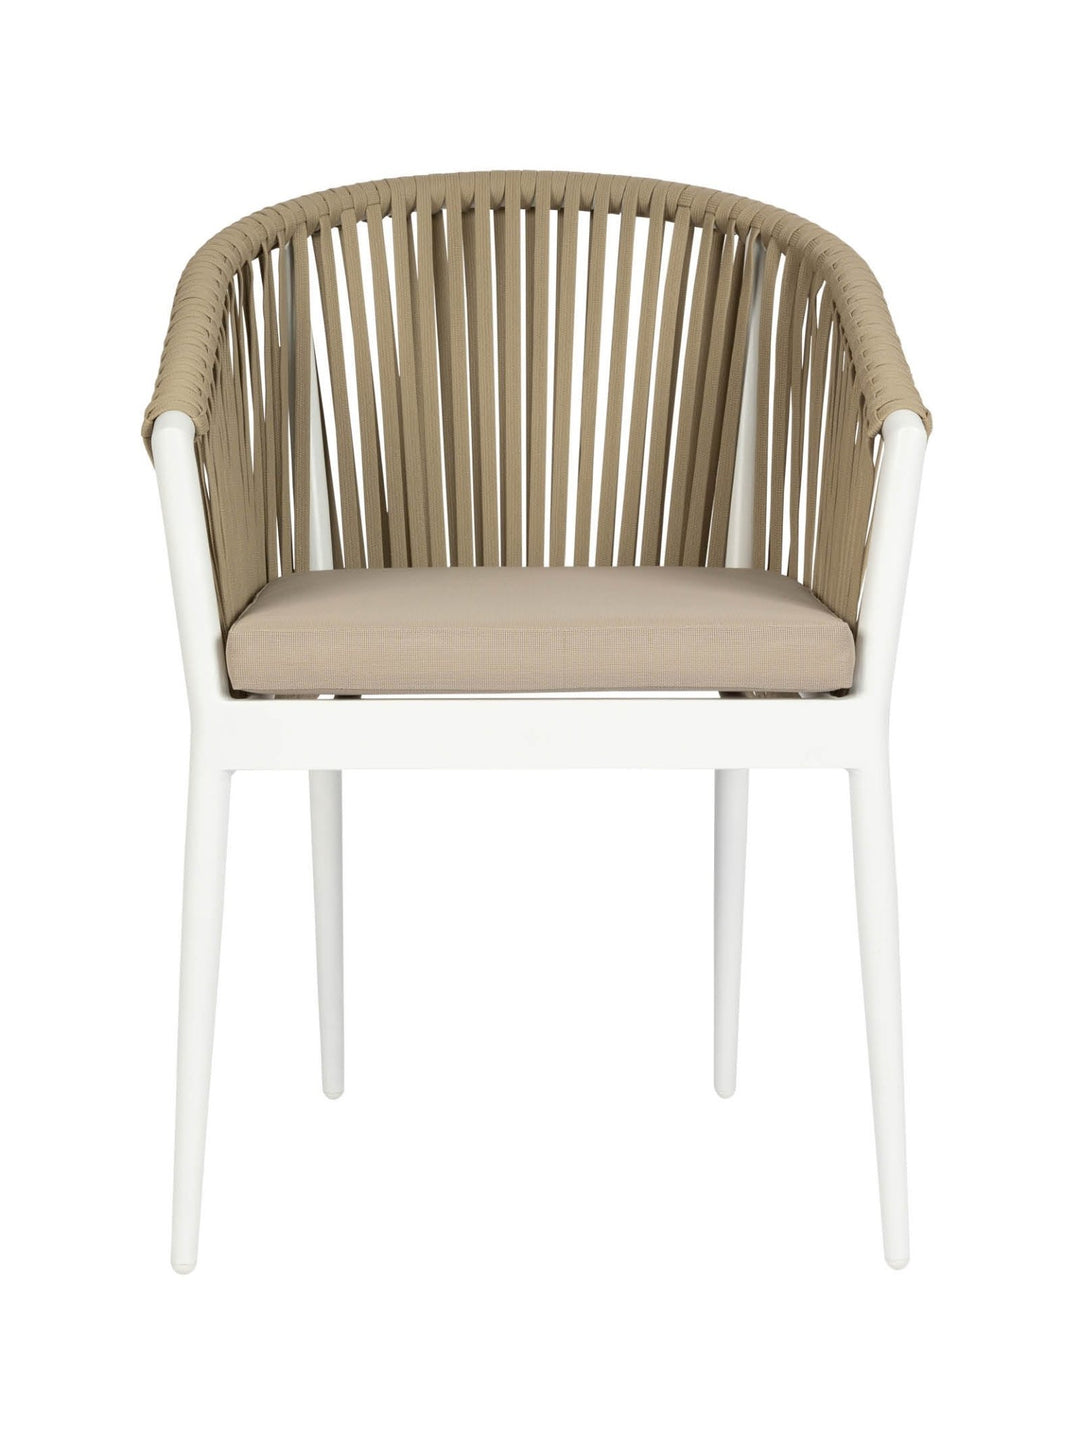 Sabi Outdoor Chair in Alabaster - Outdoor Furniture - Chair - Hertex Haus - badge_fully_outdoor